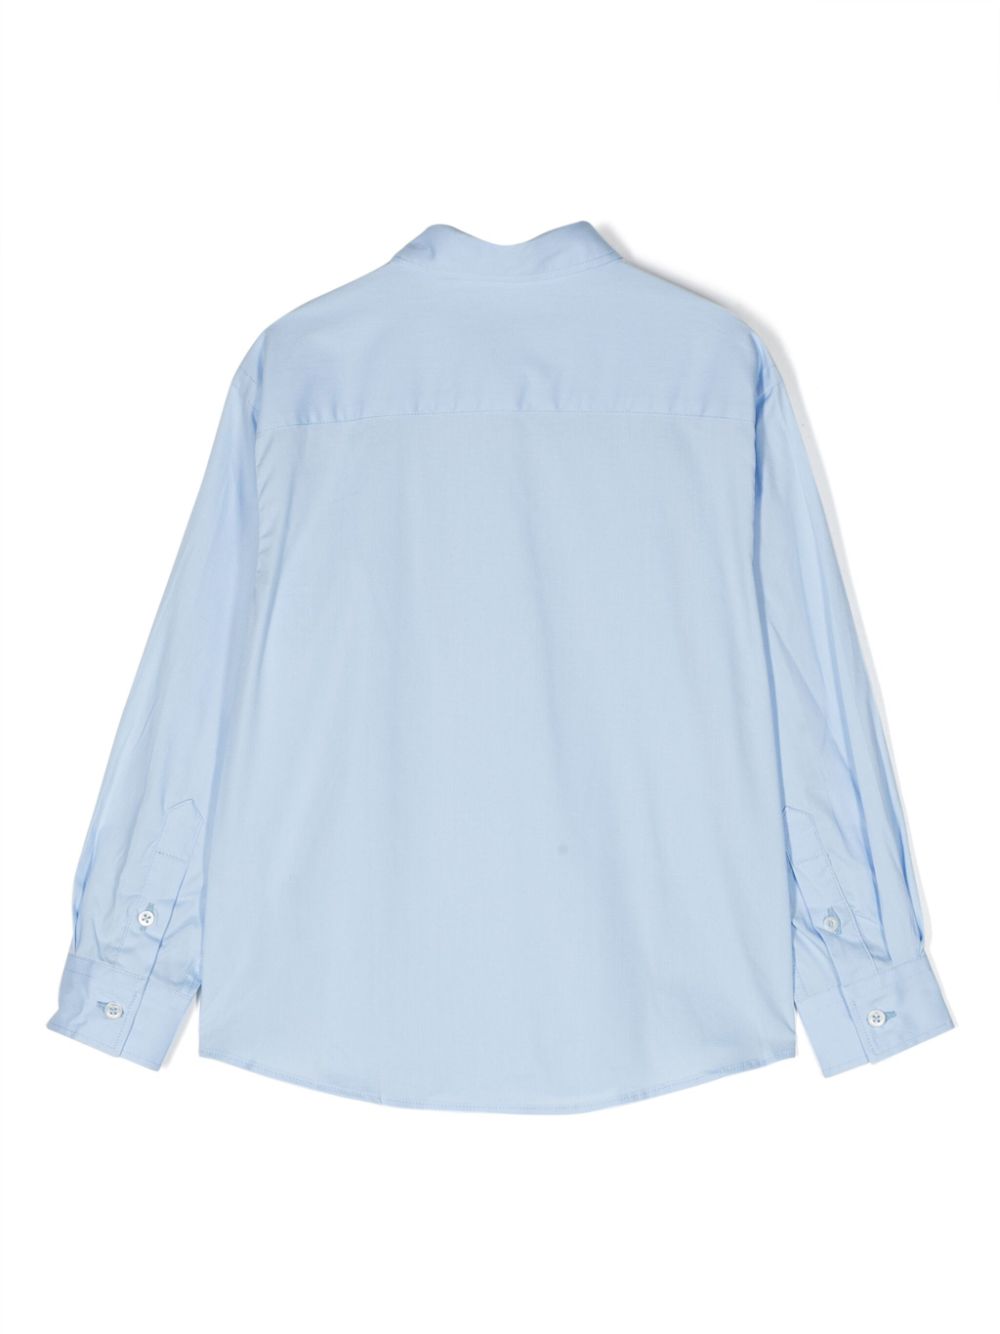 Light blue cotton shirt for boys